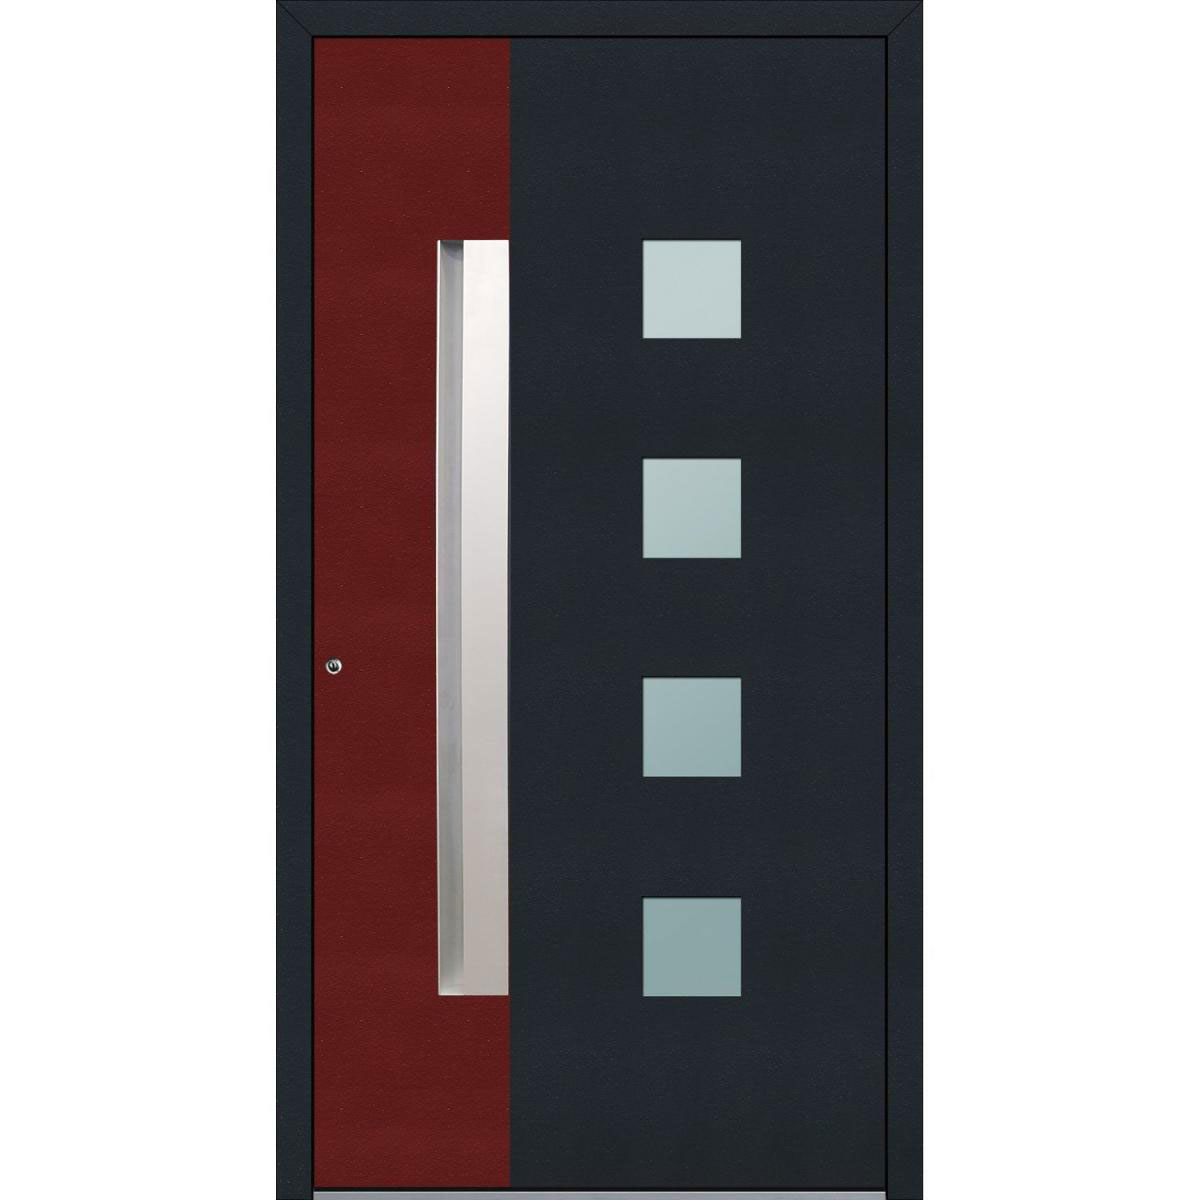 Aluminium Sicherheits-Haustür „Genua Exklusiv“, 75 mm, anthrazit-rot, 100x210 cm, Anschlag links, inkl. Griffleiste